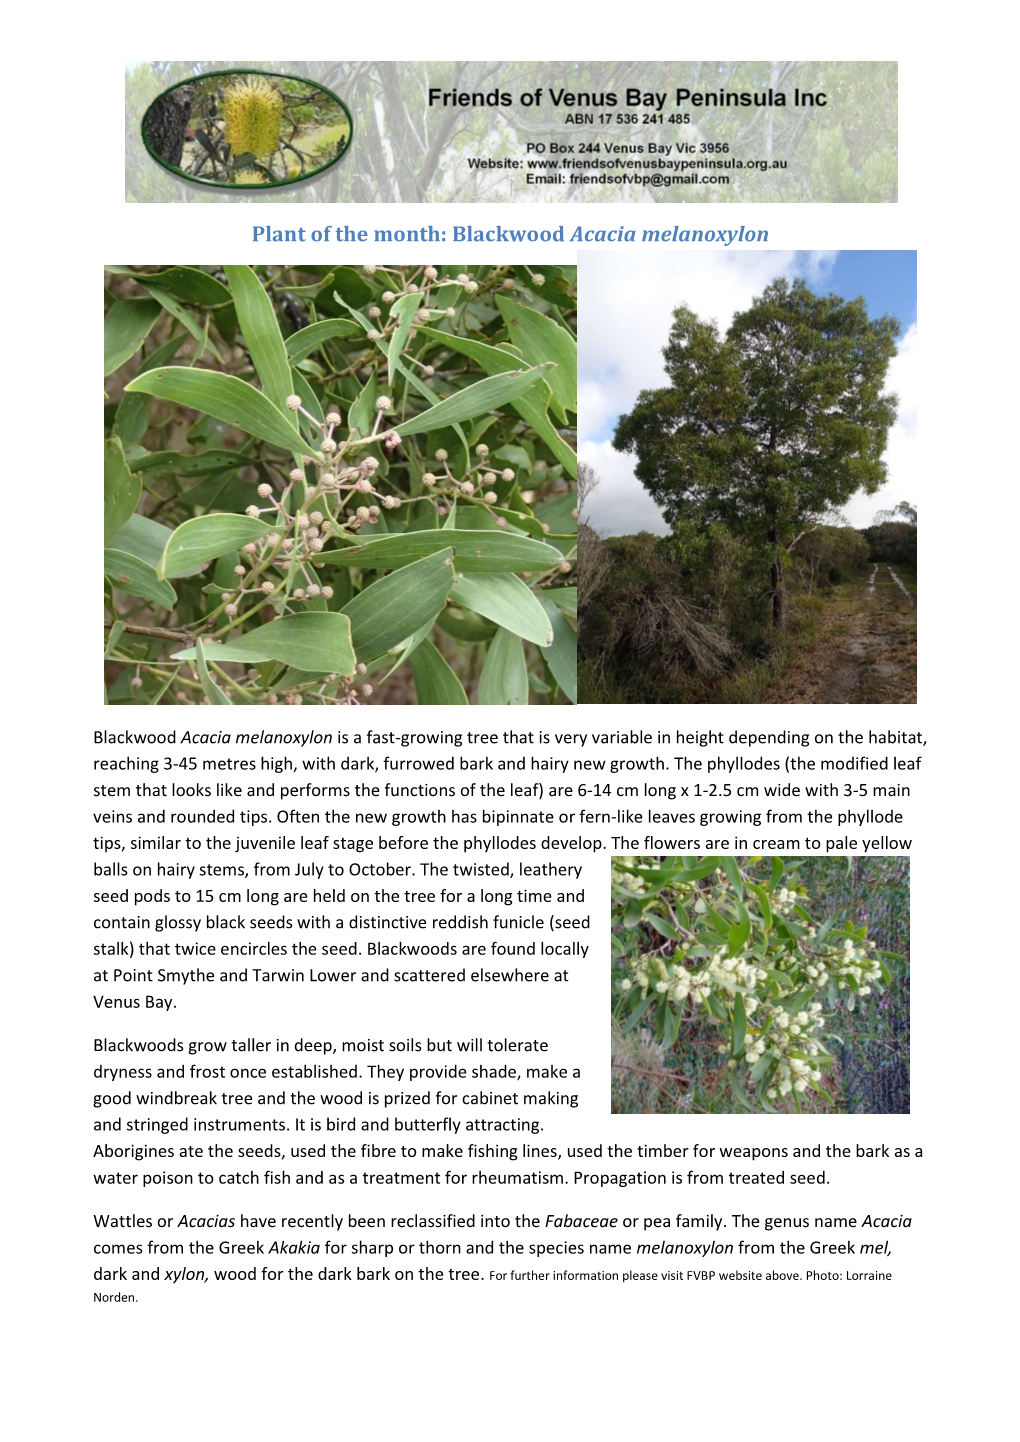 Blackwood Acacia Melanoxylon